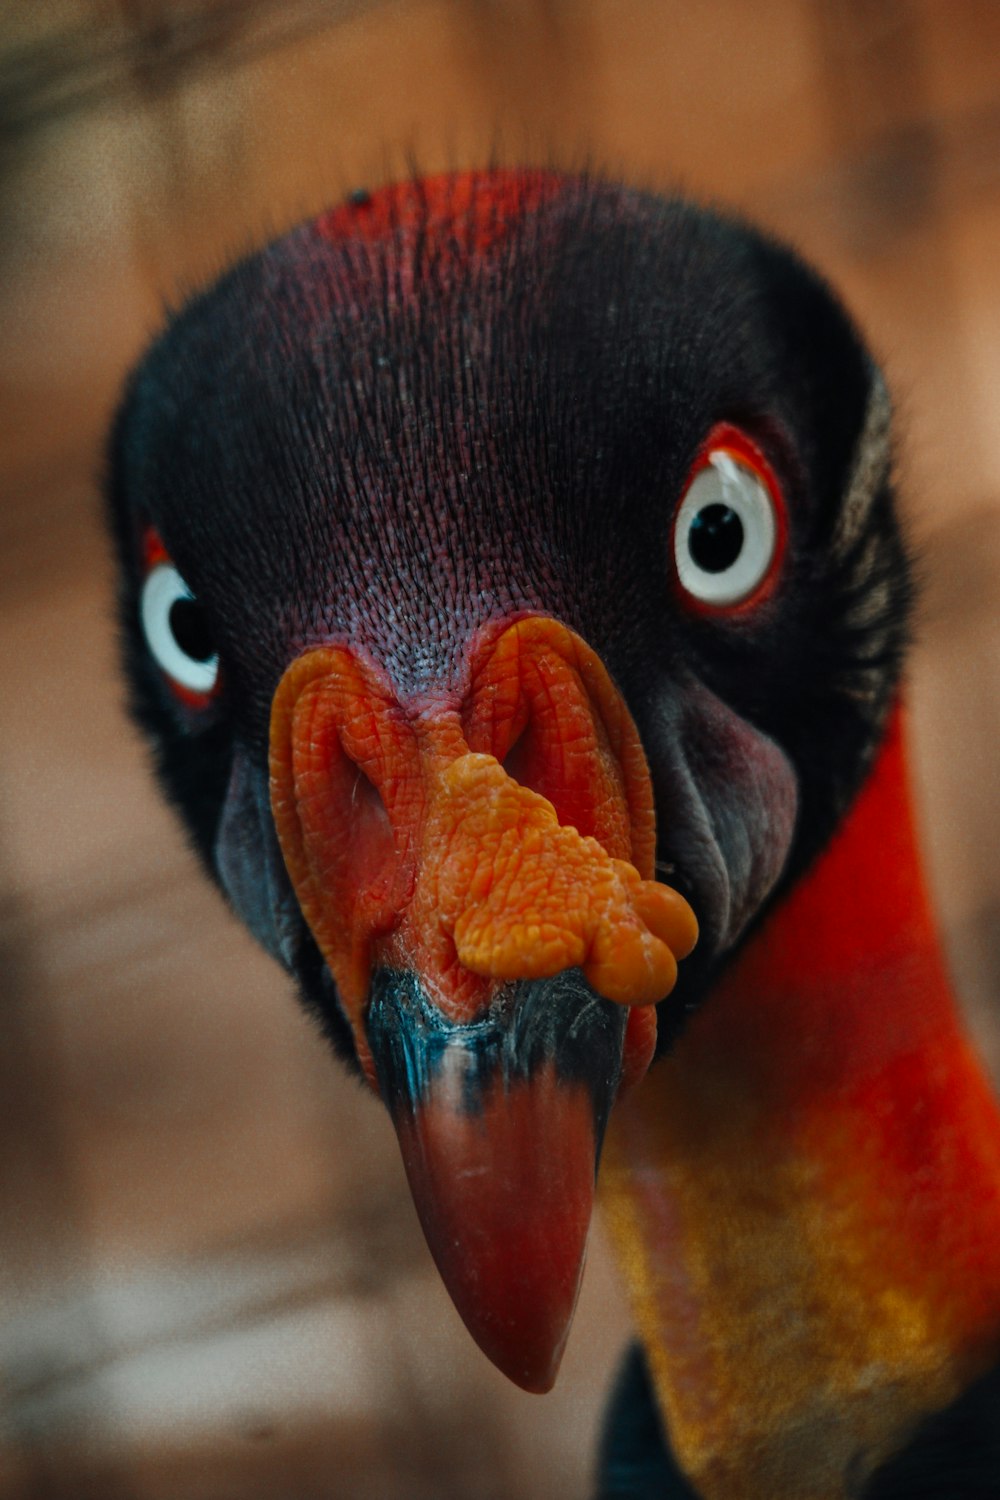 a close up of a bird with a red beak